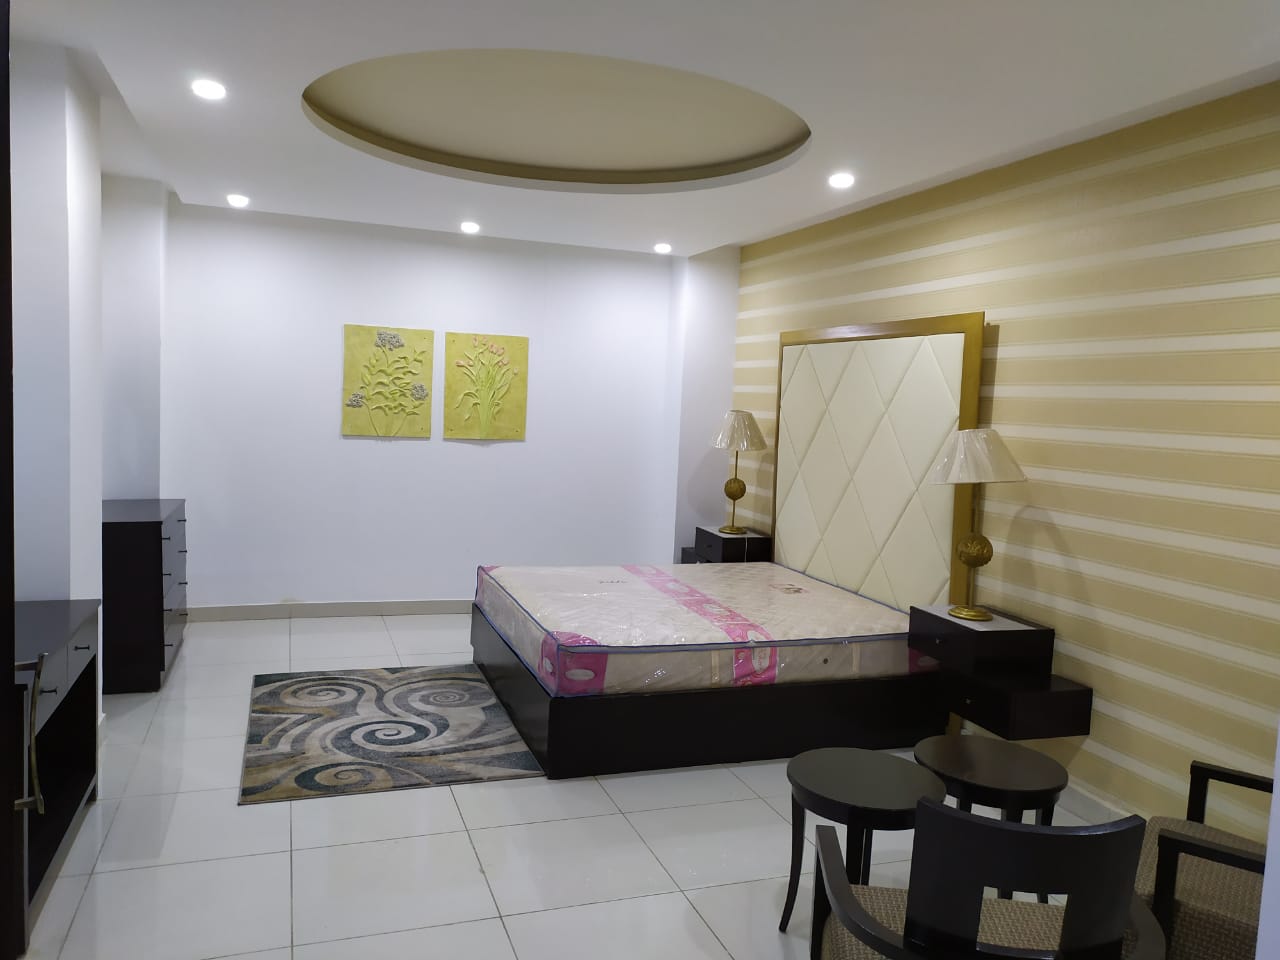 Flat Available for Rent at Madina Town, Faisalabad